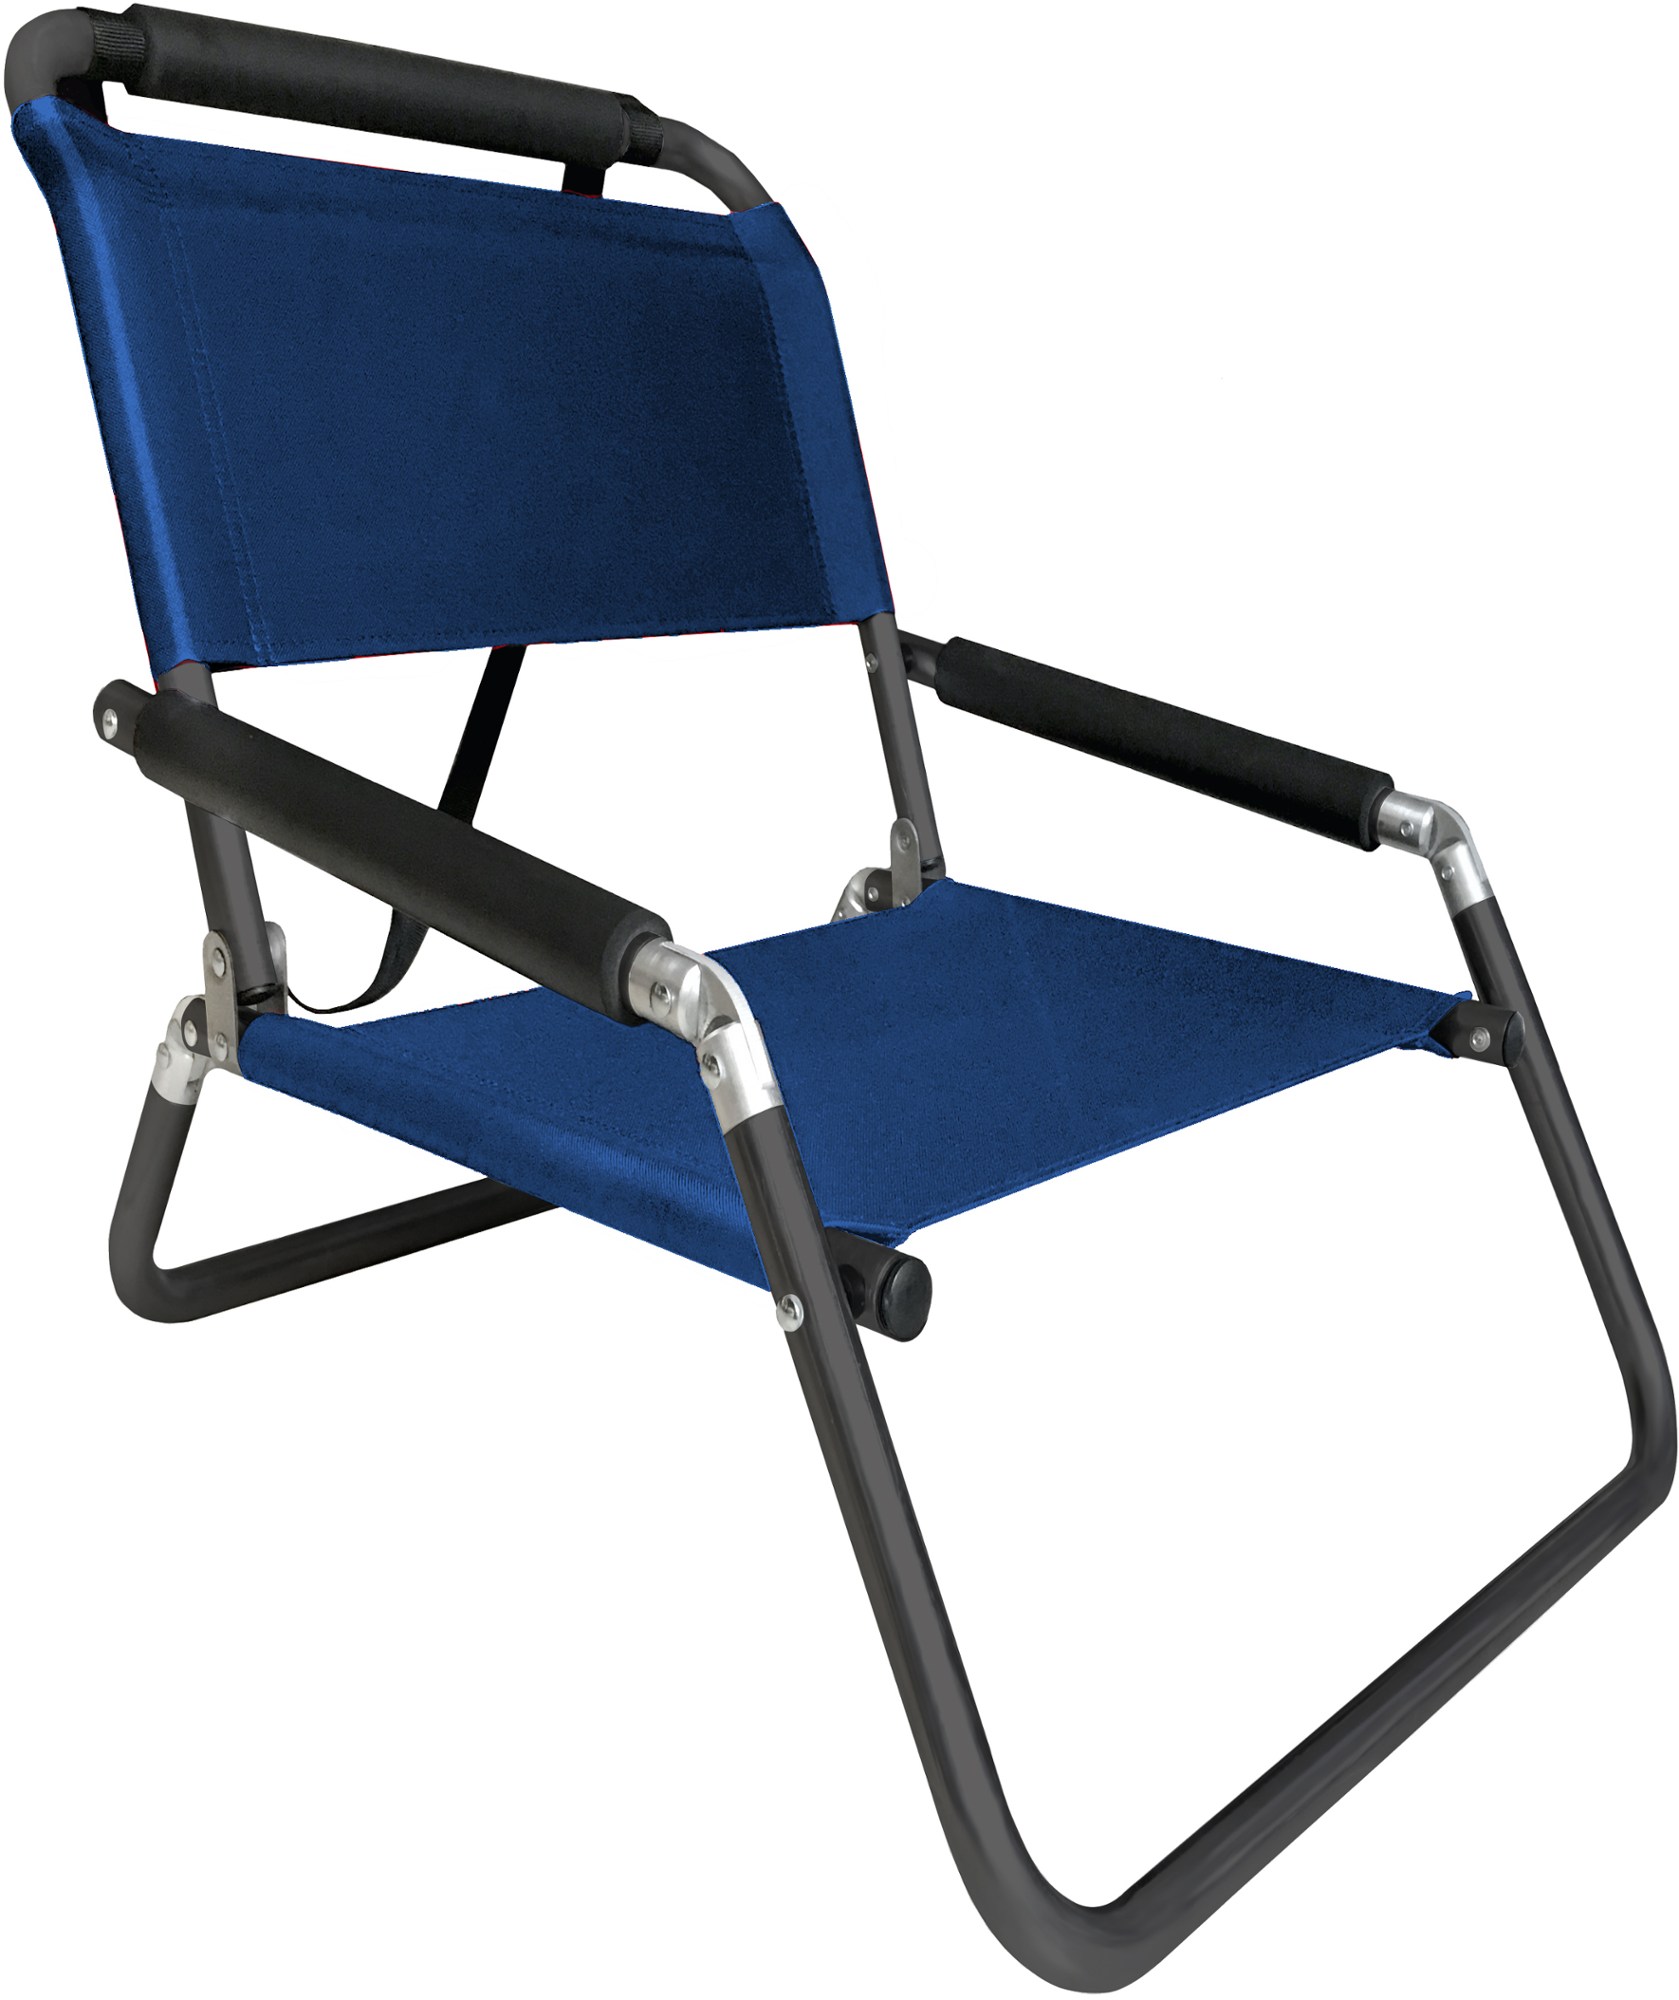 Пляжный стул XL Neso, синий promotion outdoor folding portable beach chairs sun chair sea chair beach